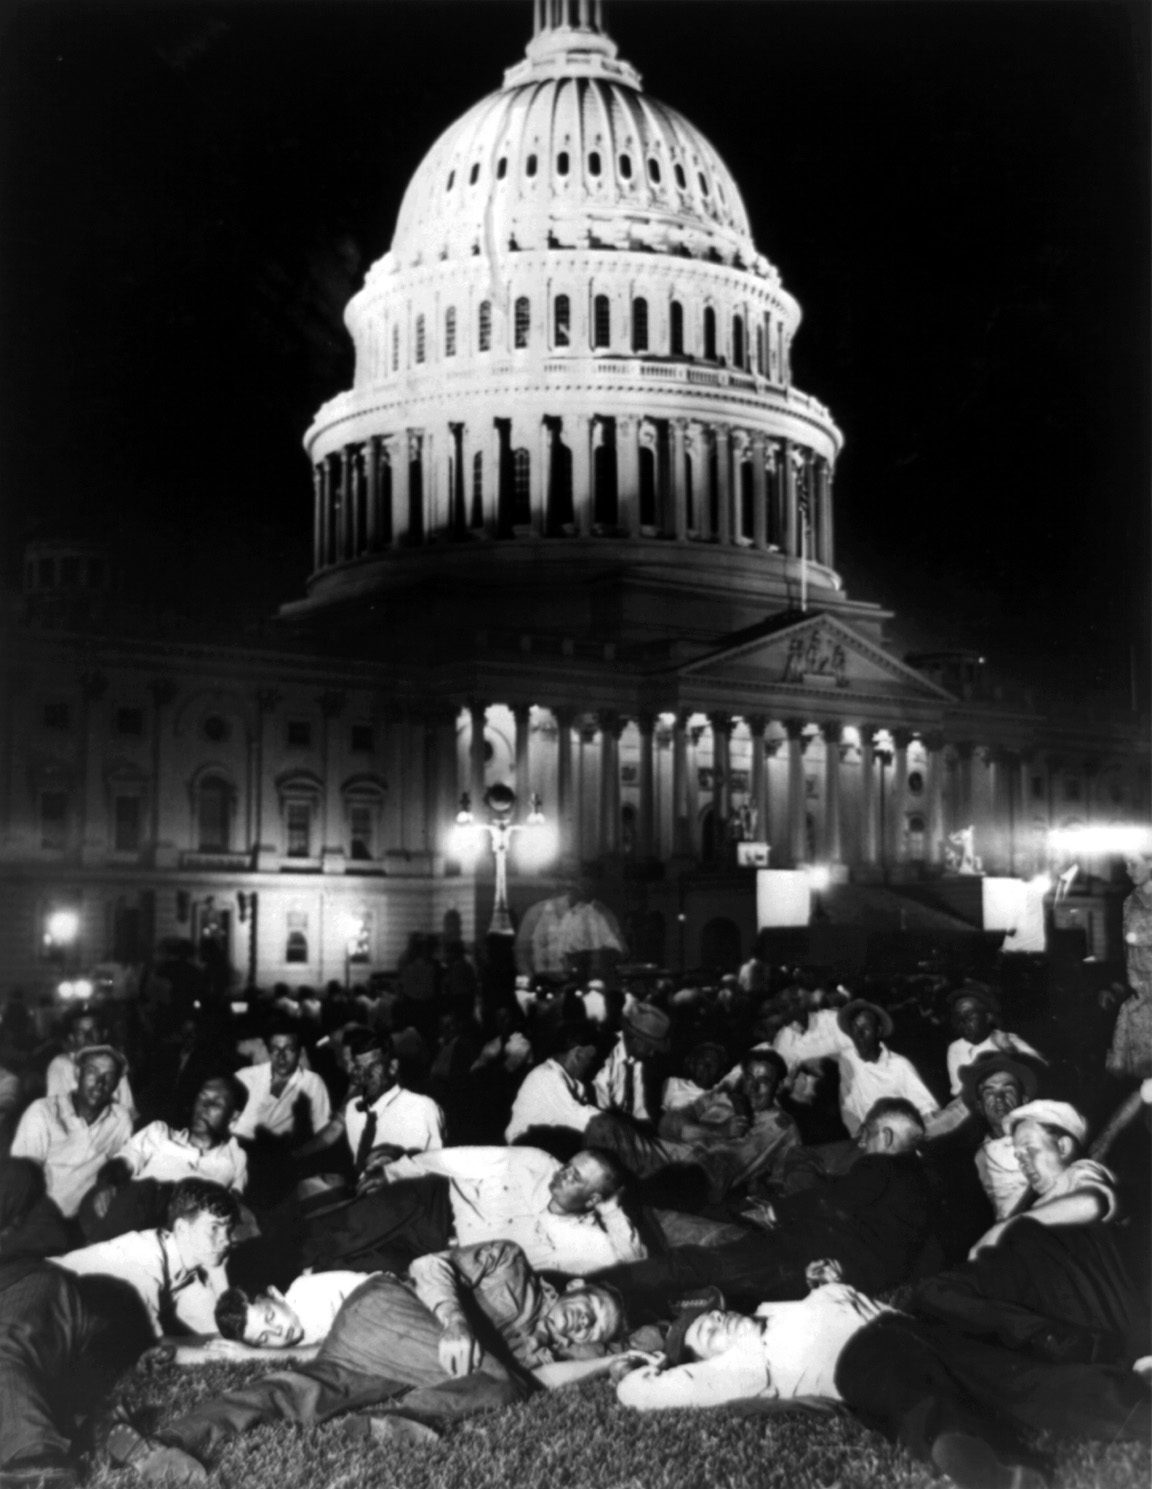 The Bonus Army marchers on the U.S. Capitol lawn, Washington, D.C., July 13, 1932.